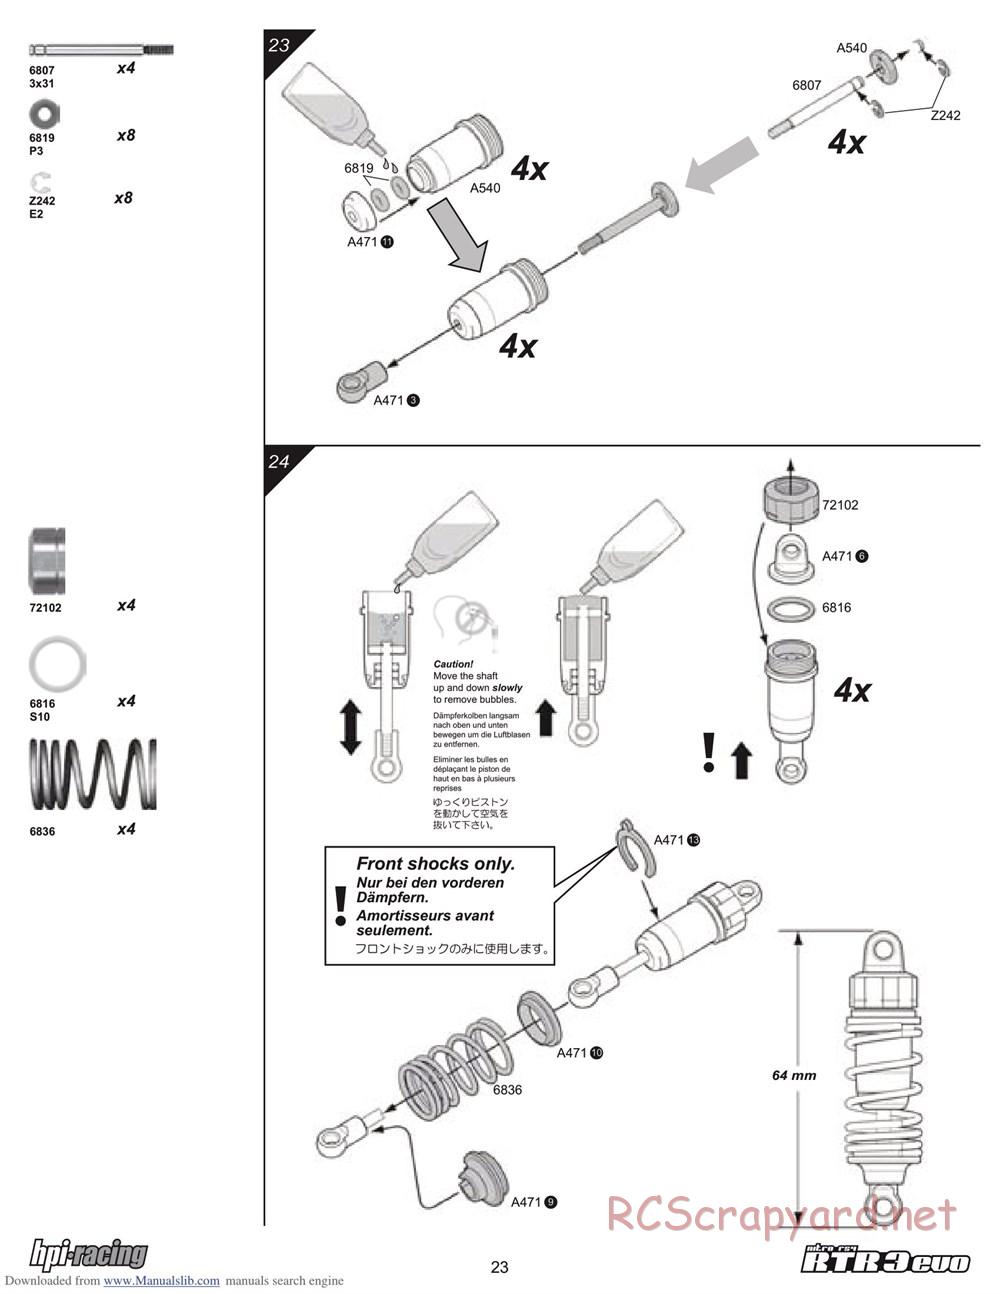 HPI - Nitro RS4 3 Evo - Manual - Page 23